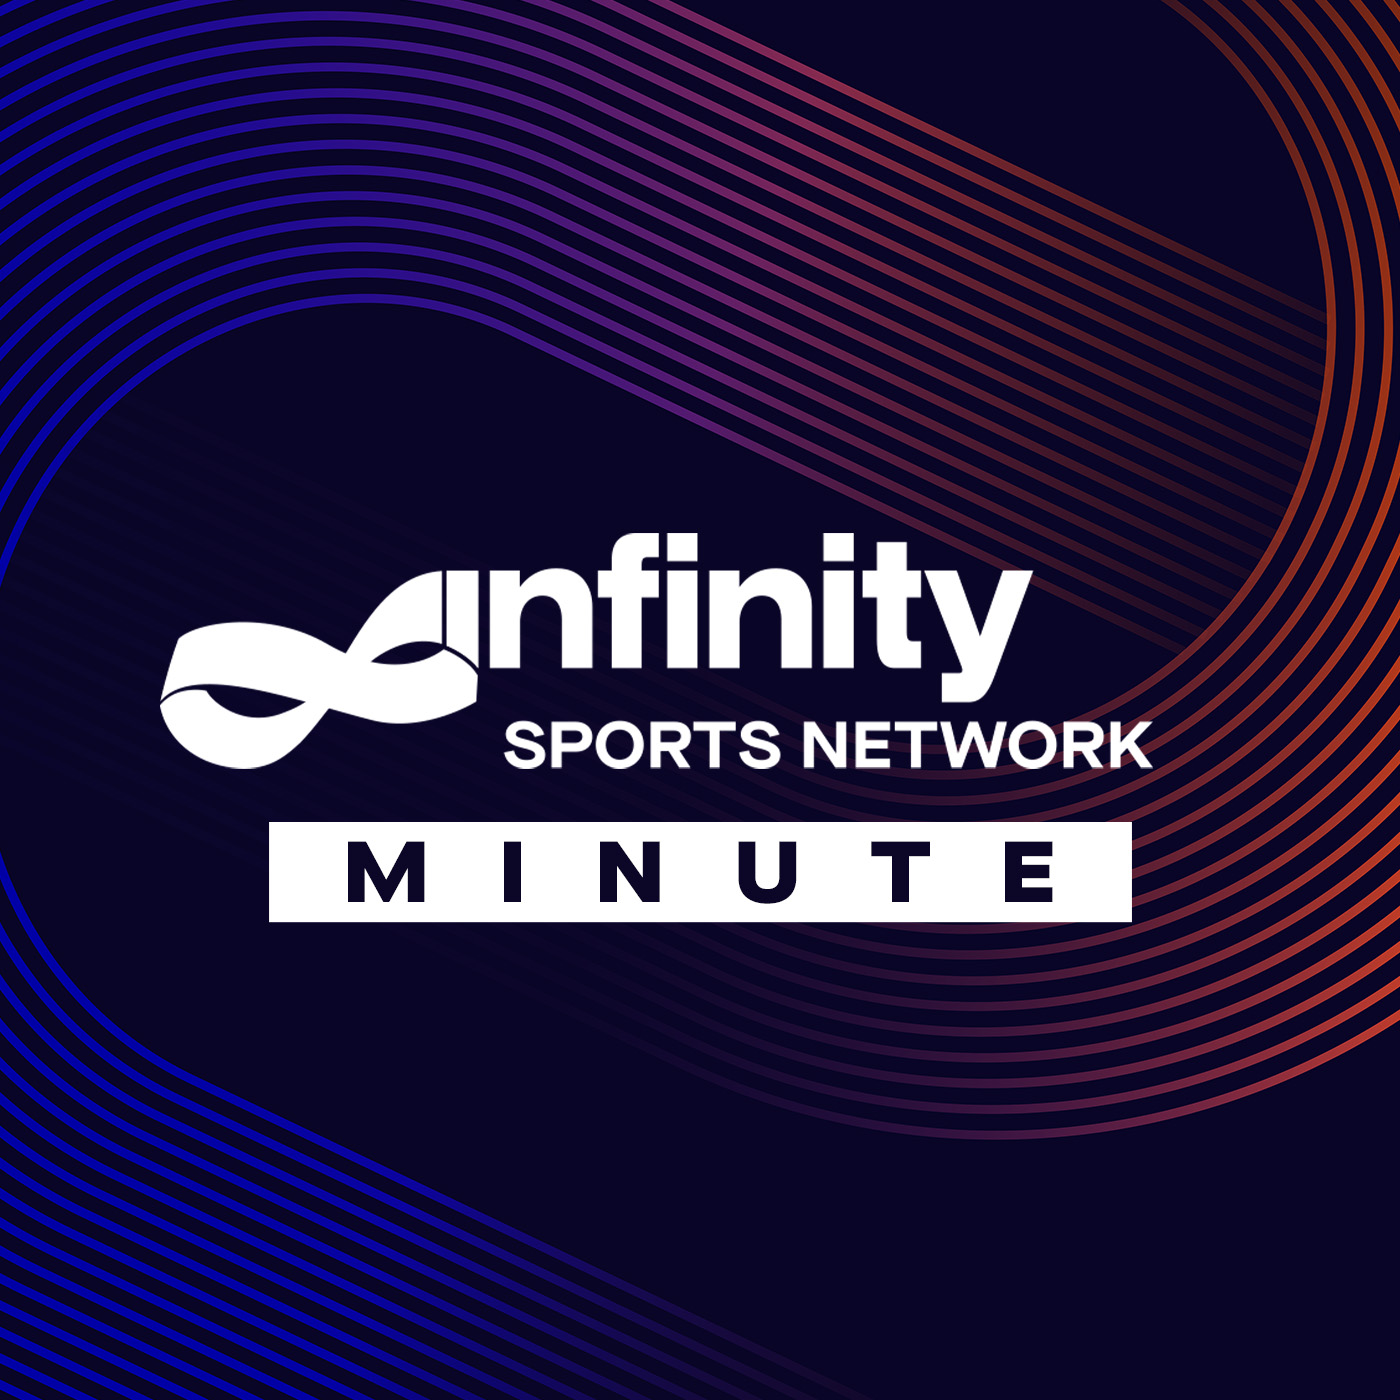 5-24 Andrew Perloff Sports Minute on The Olympics